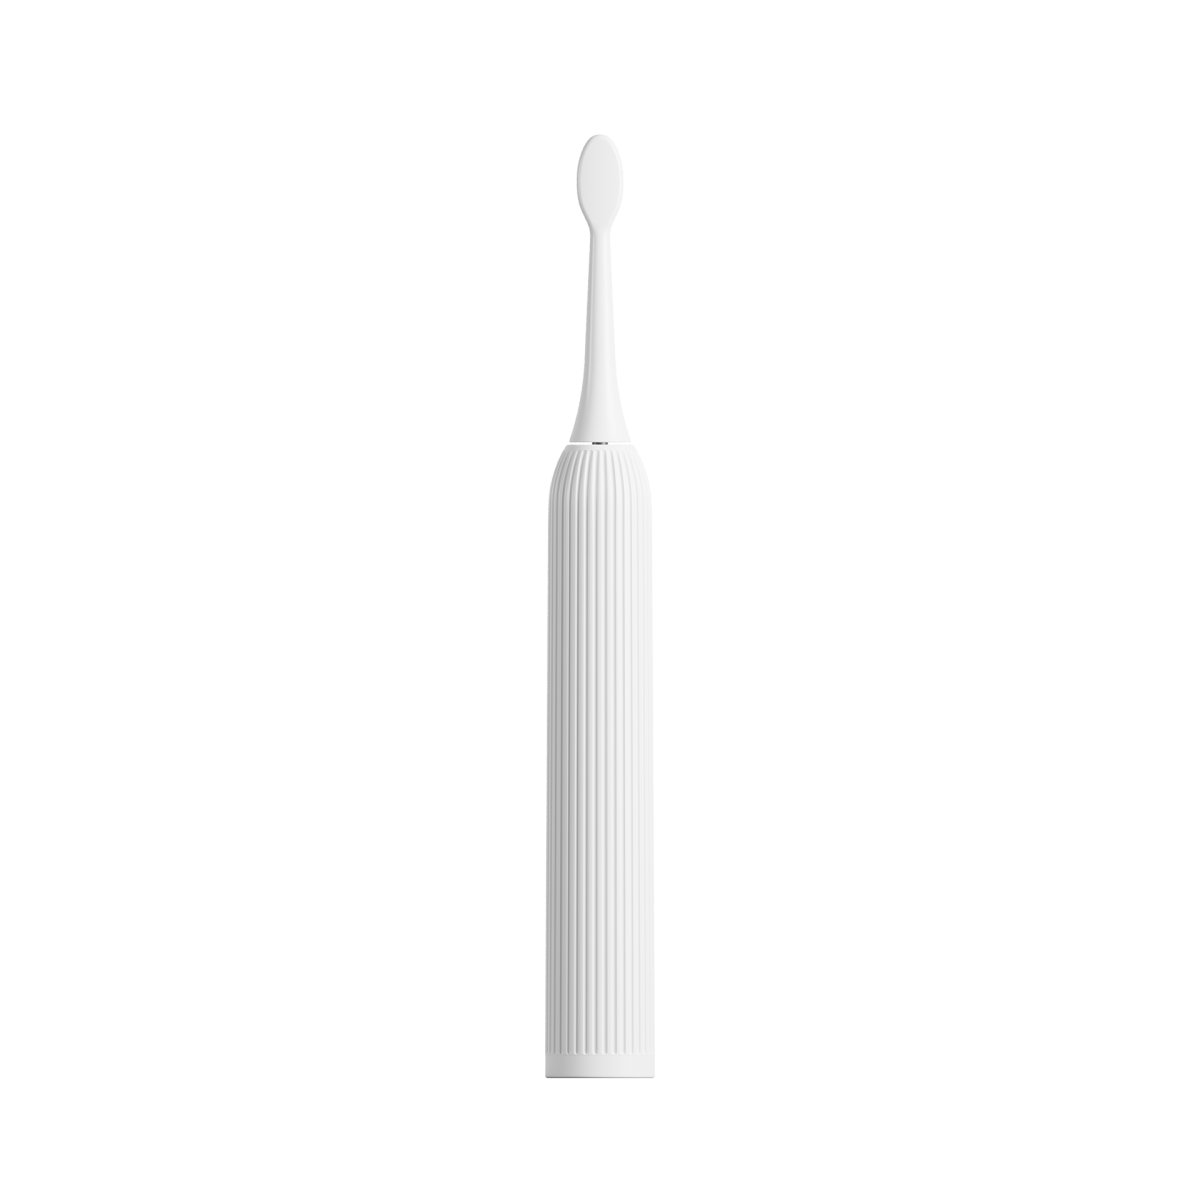 TESLA Smart Toothbrush Sonic TS200 White